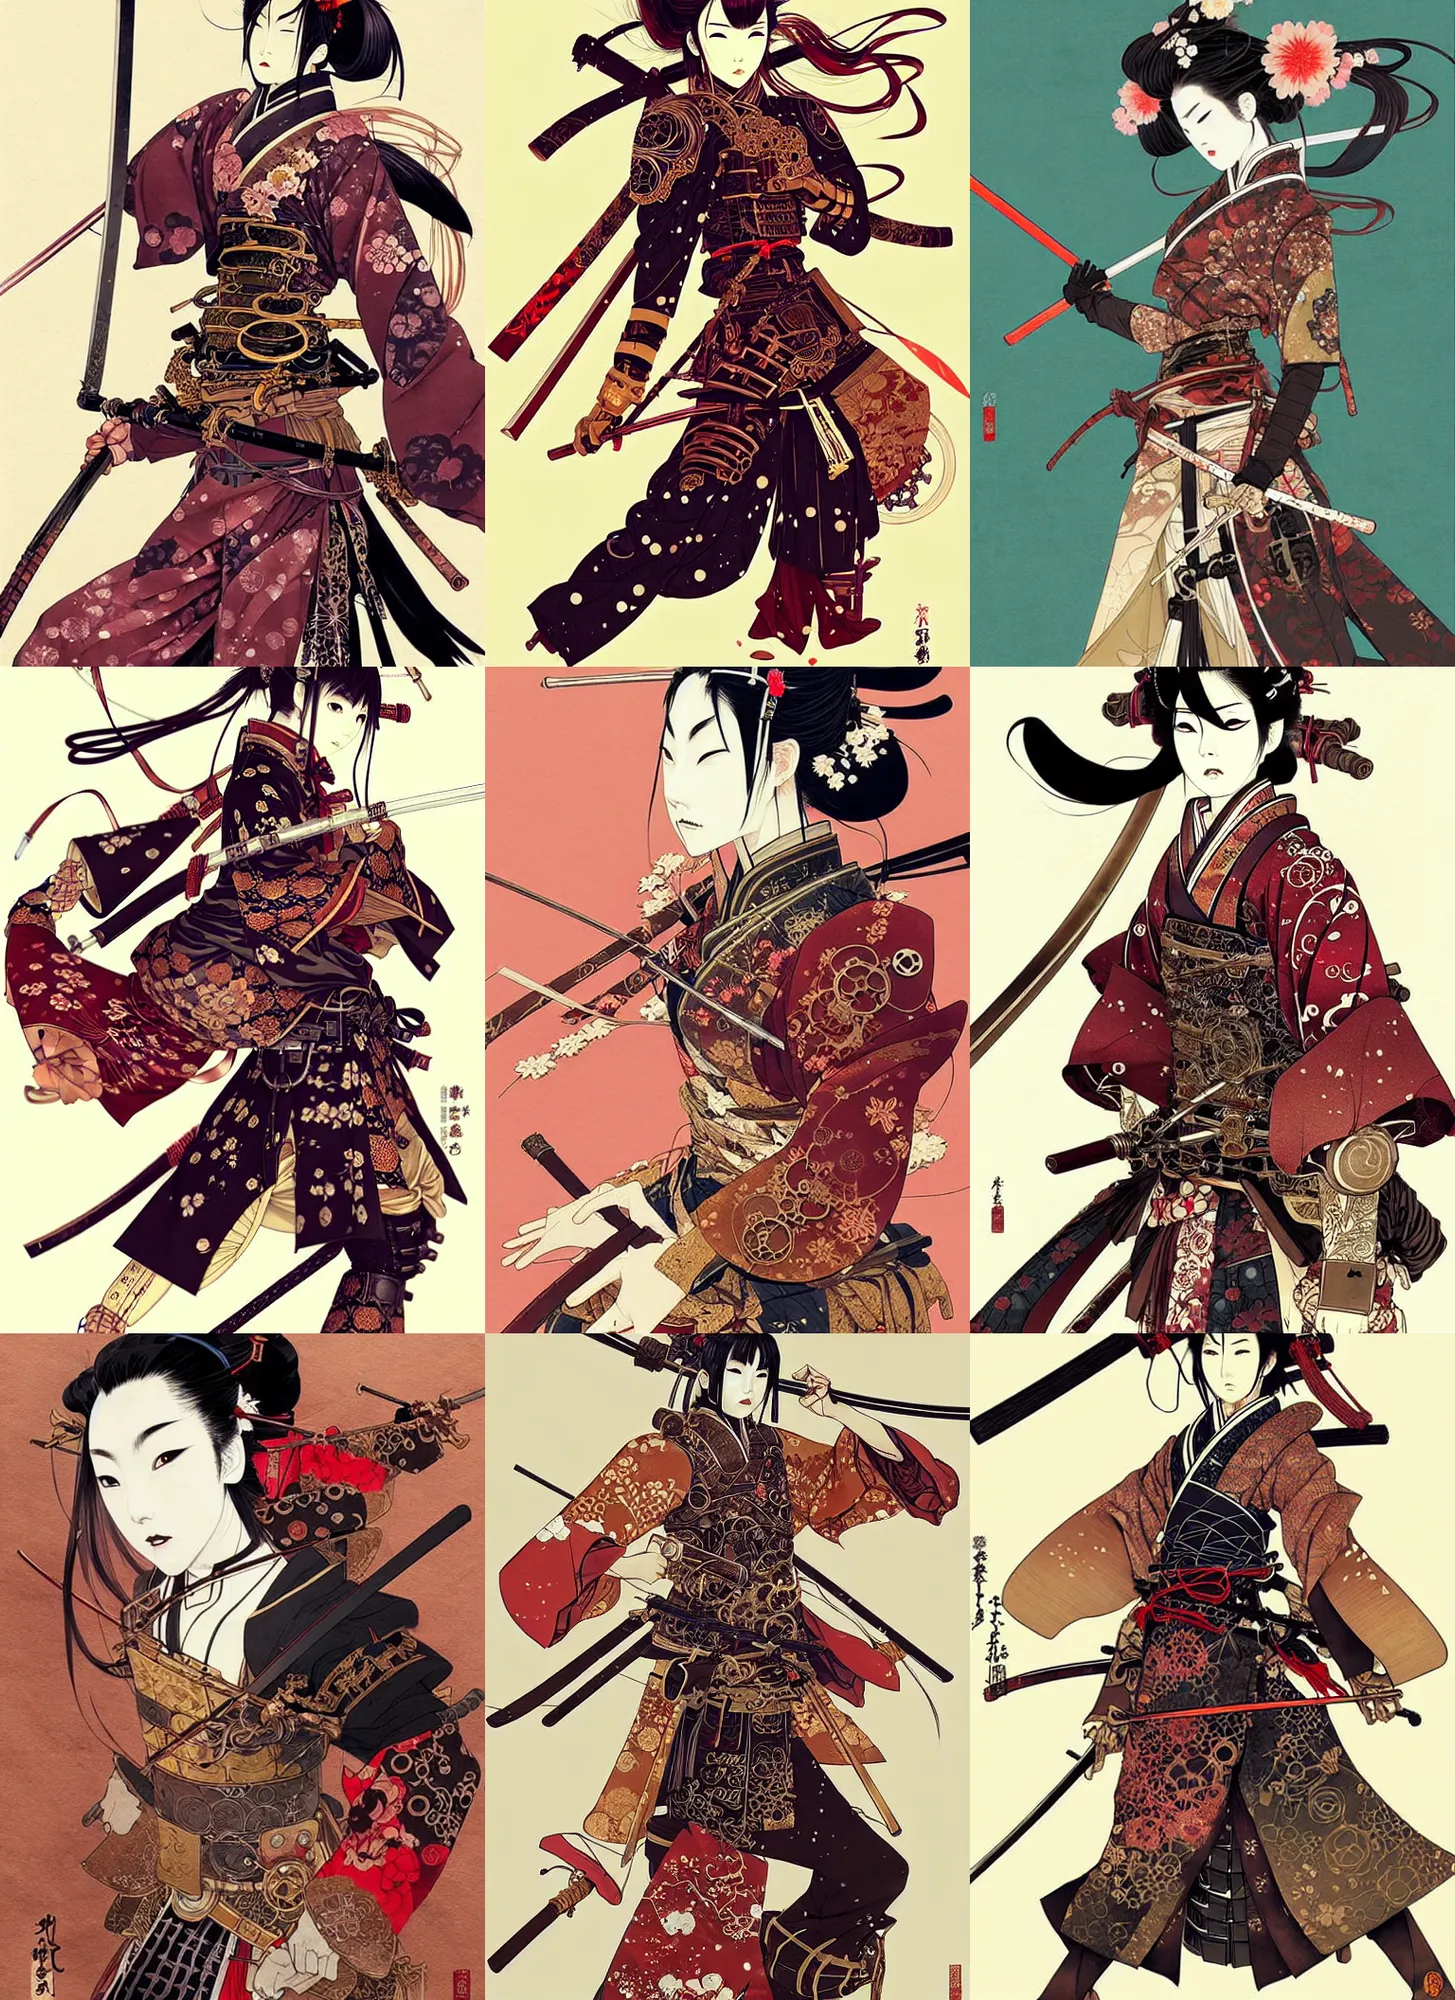 Prompt: very beautiful steampunk samurai in battle pose, detailed portrait, wearing kimono armor, sword, by conrad roset, takato yomamoto, jesper ejsing, beautiful